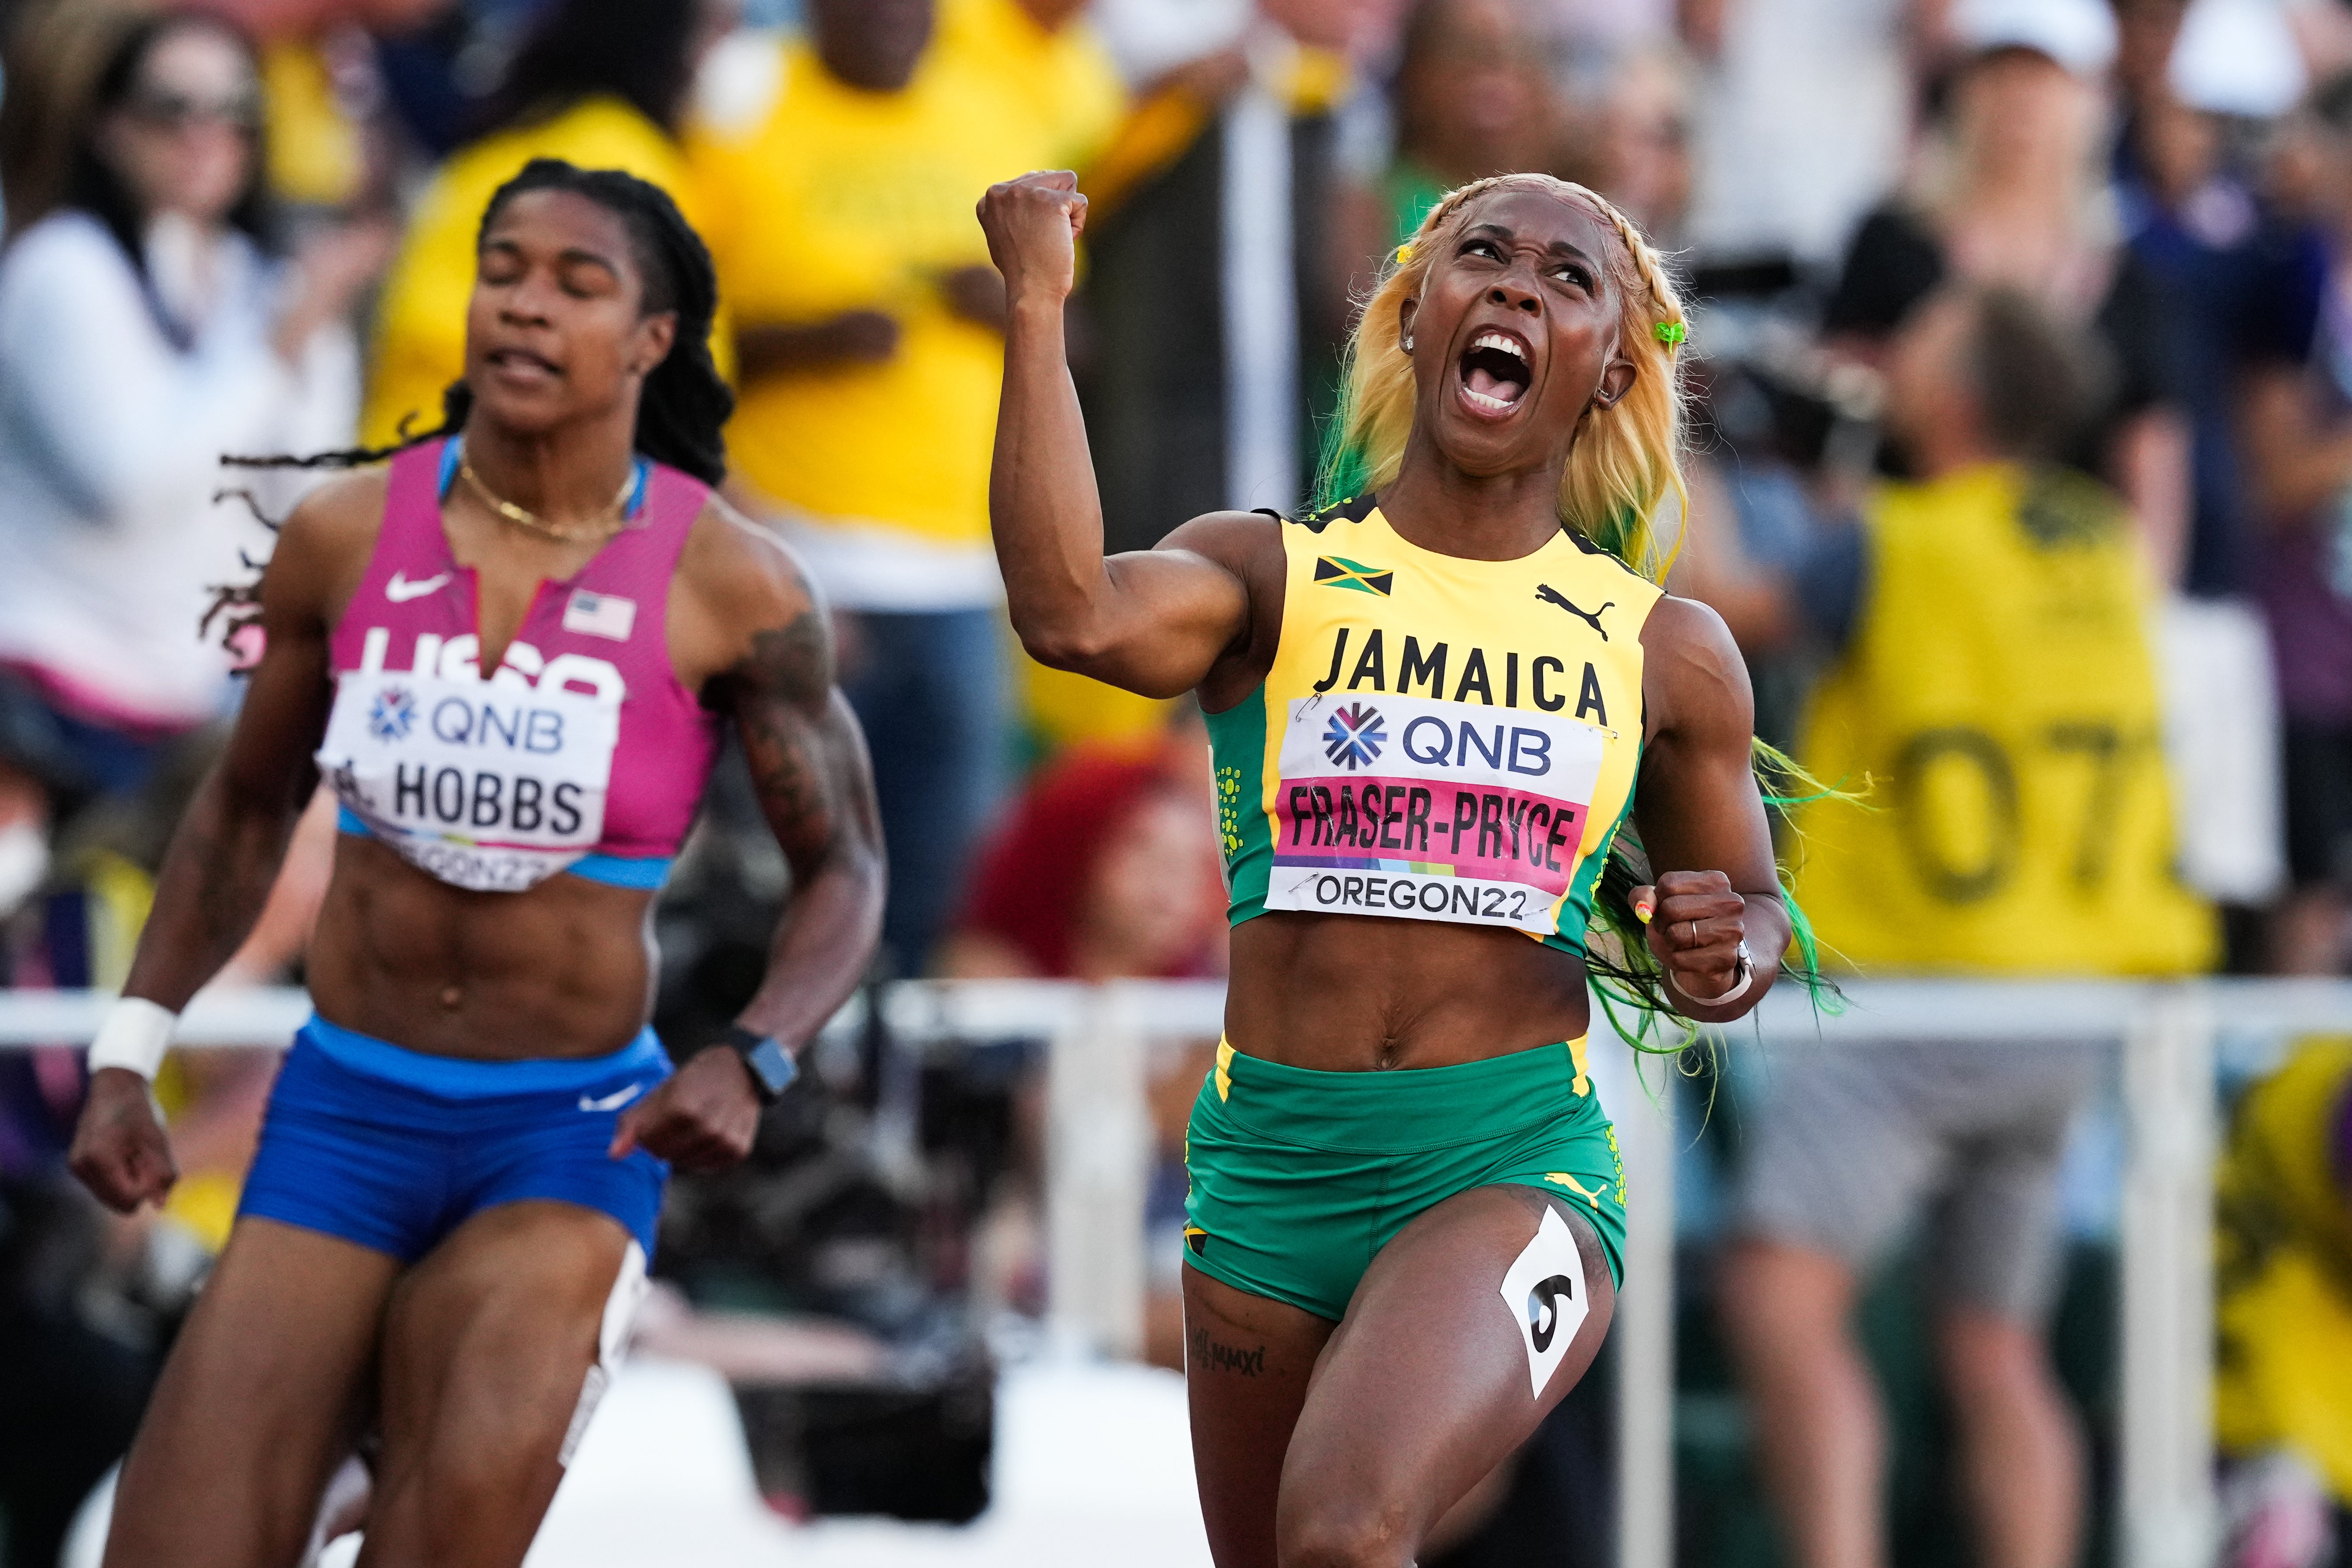 Jamaica’s Fraser-Pryce celebrates her fifth 100m world title